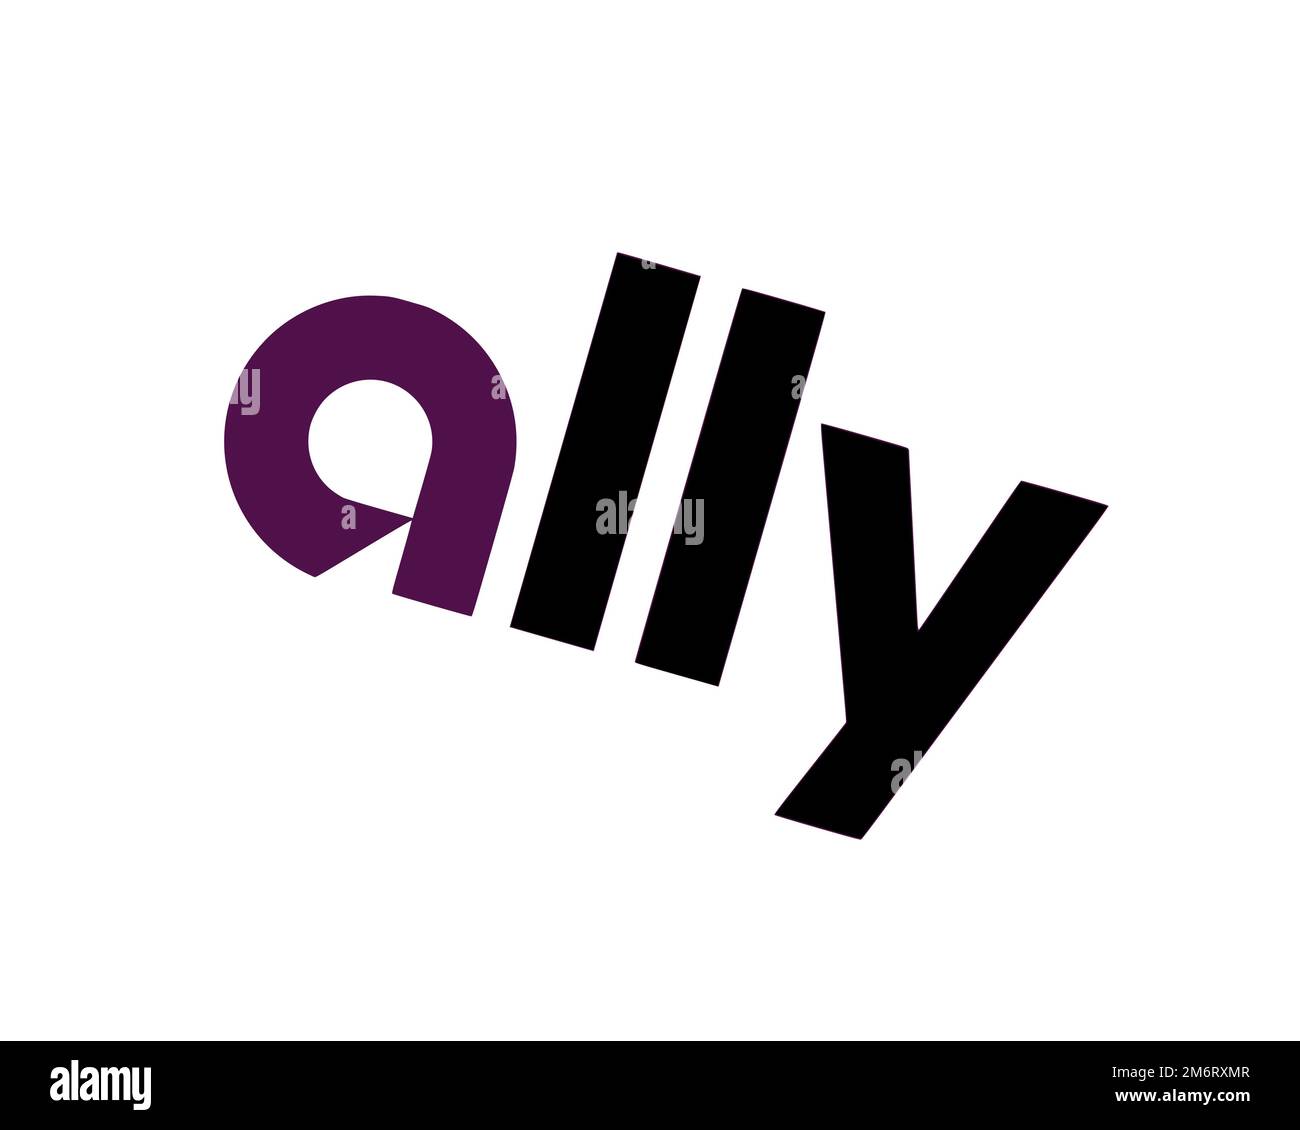 Ally Financial, Rotated Logo, White Background B Stock Photo - Alamy